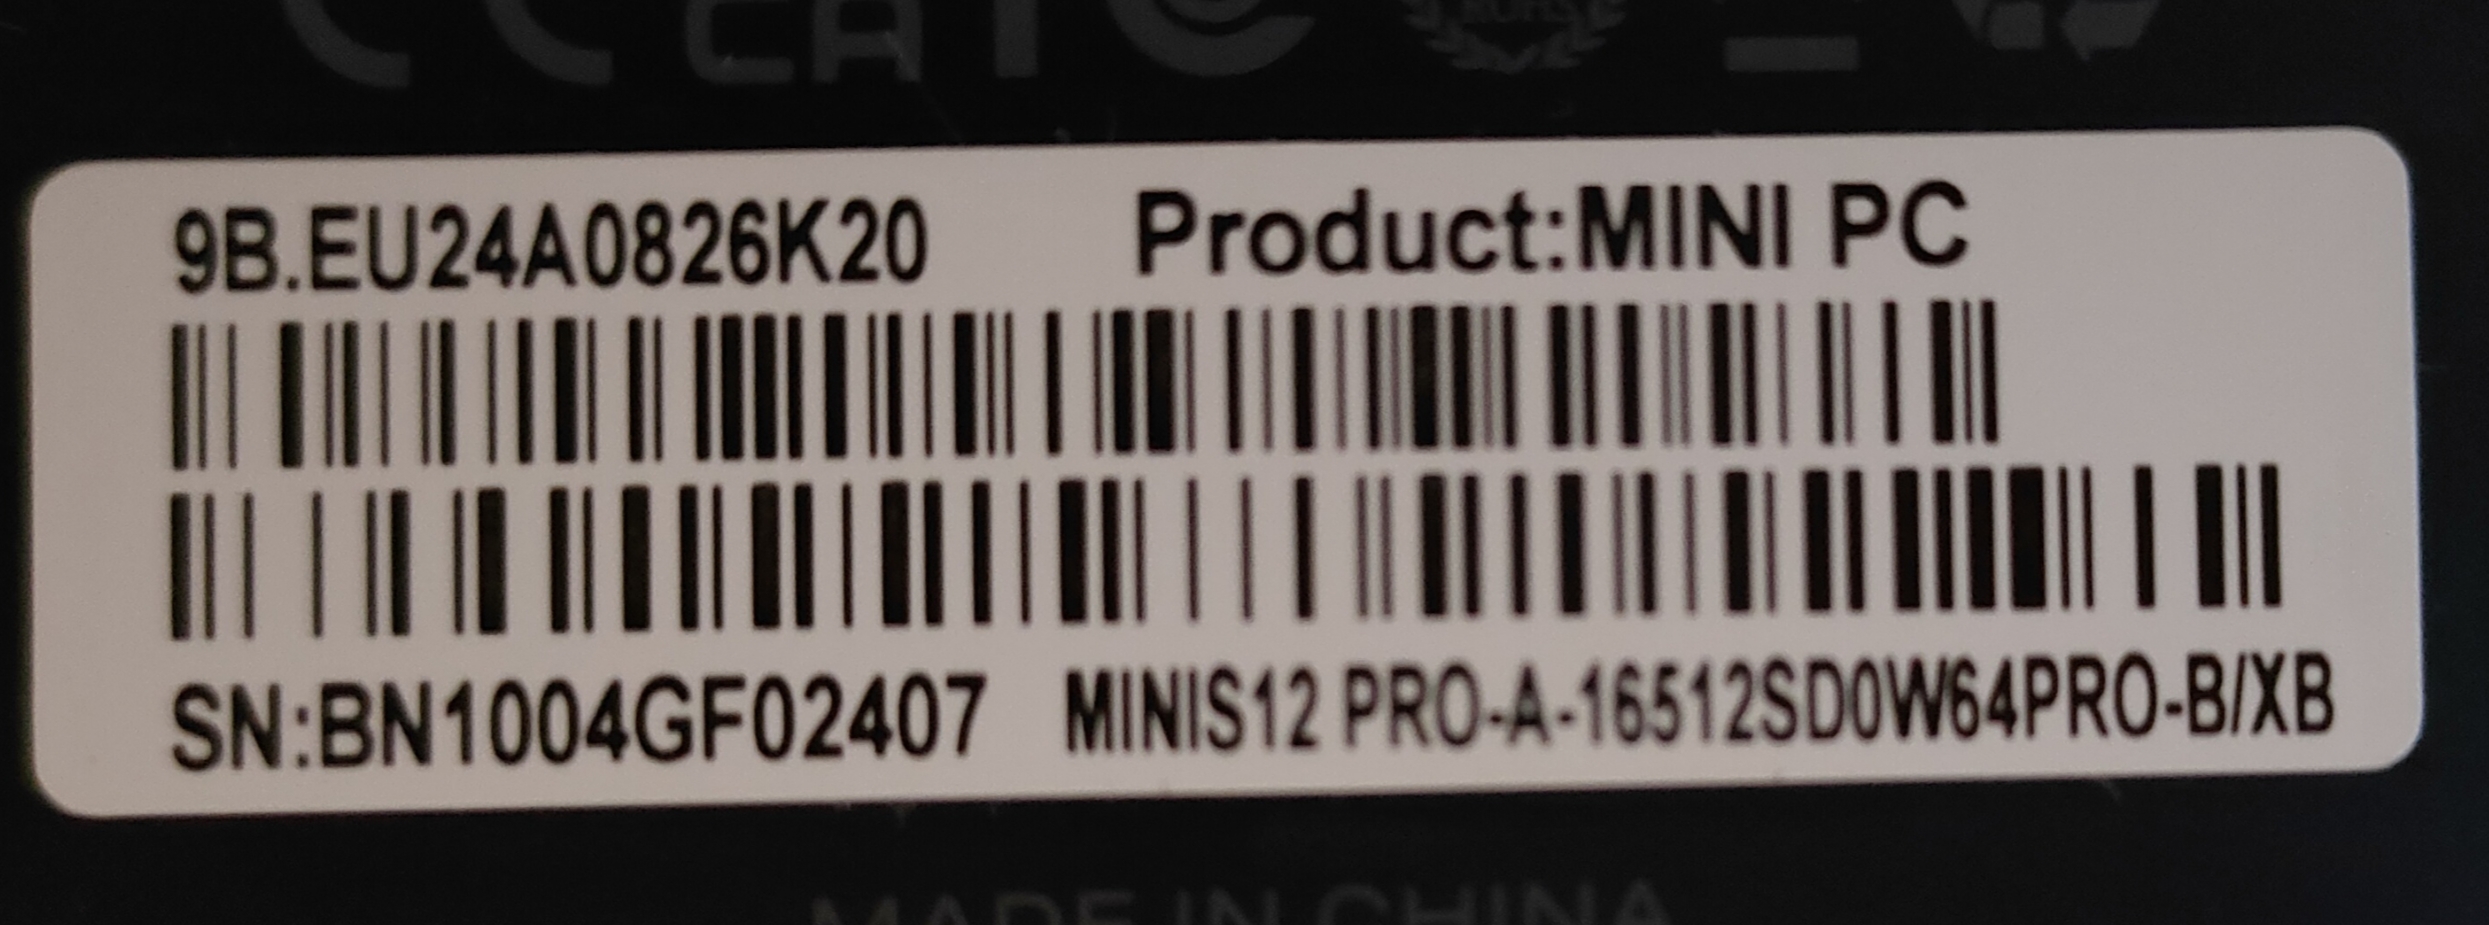 Mini S12 PRO Win11 Pro Product key request